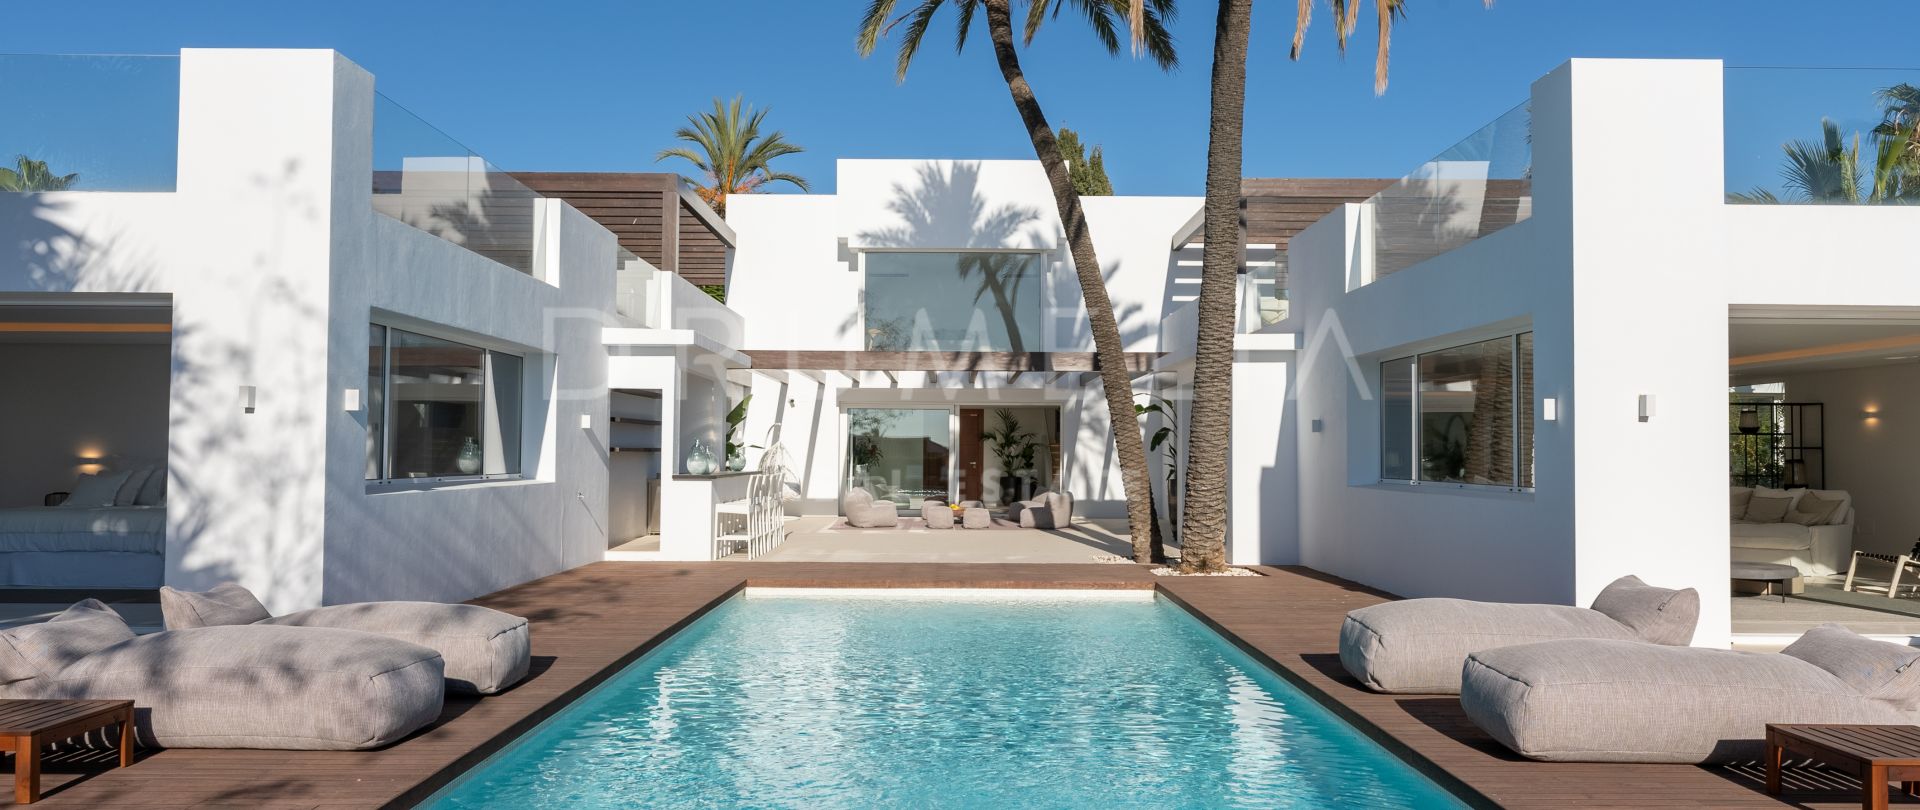 Villa for salg i Las Chapas, Marbella Øst